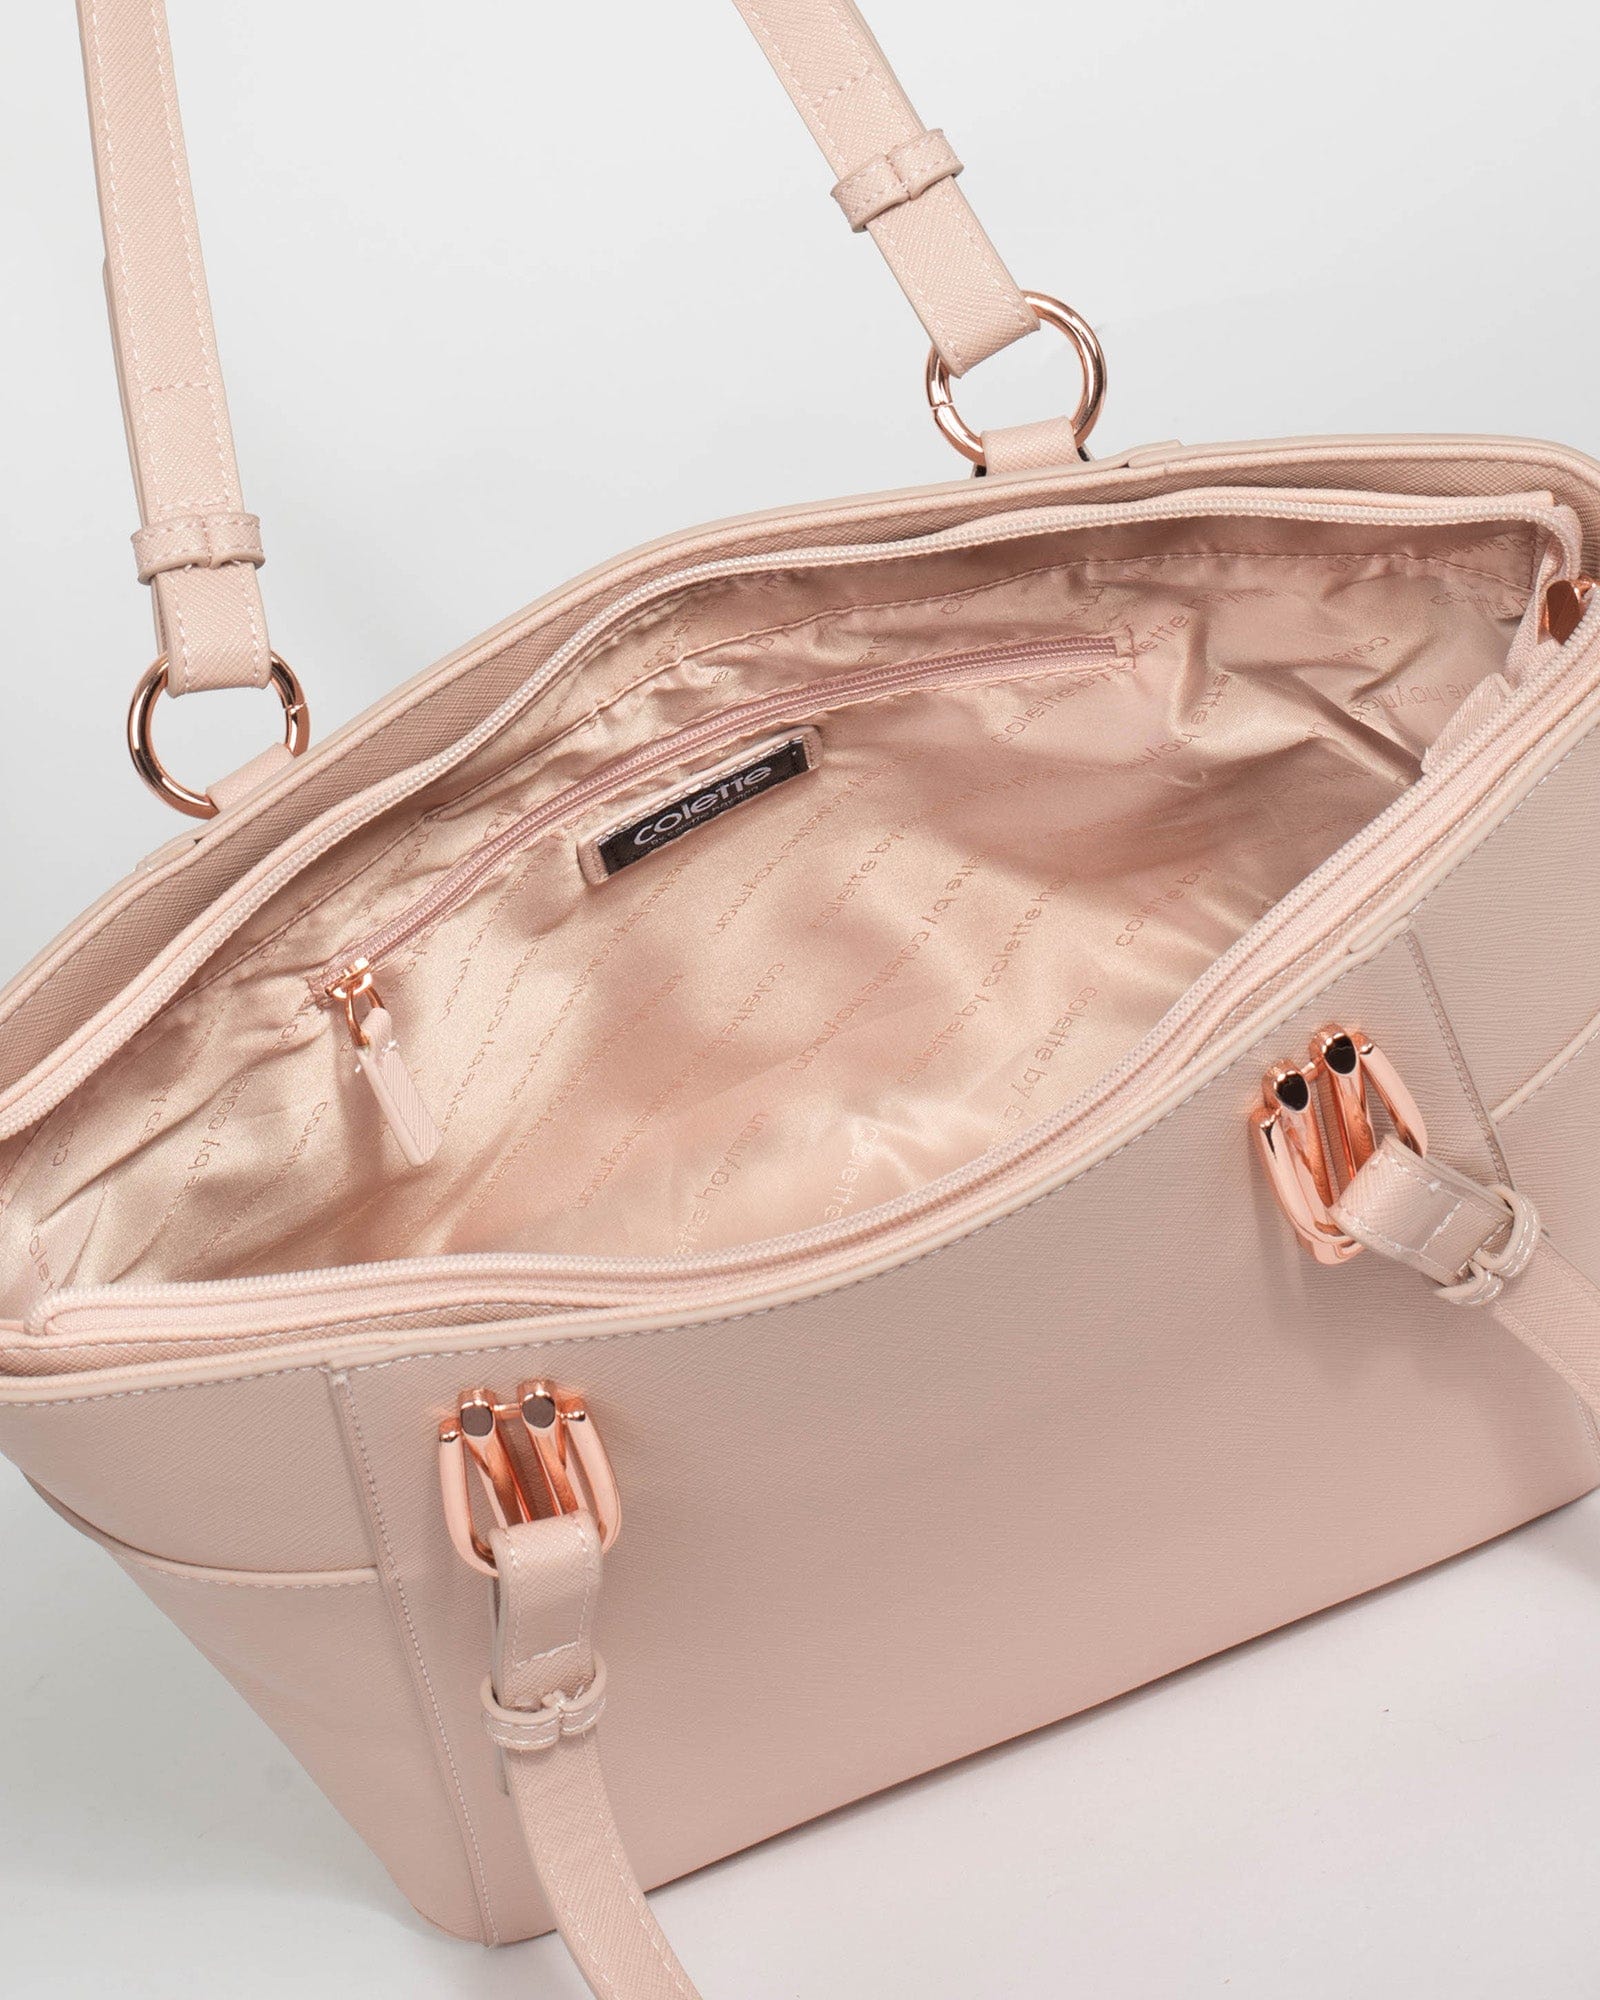 Colette handbag fashion retailer collapses, 140 stores at risk